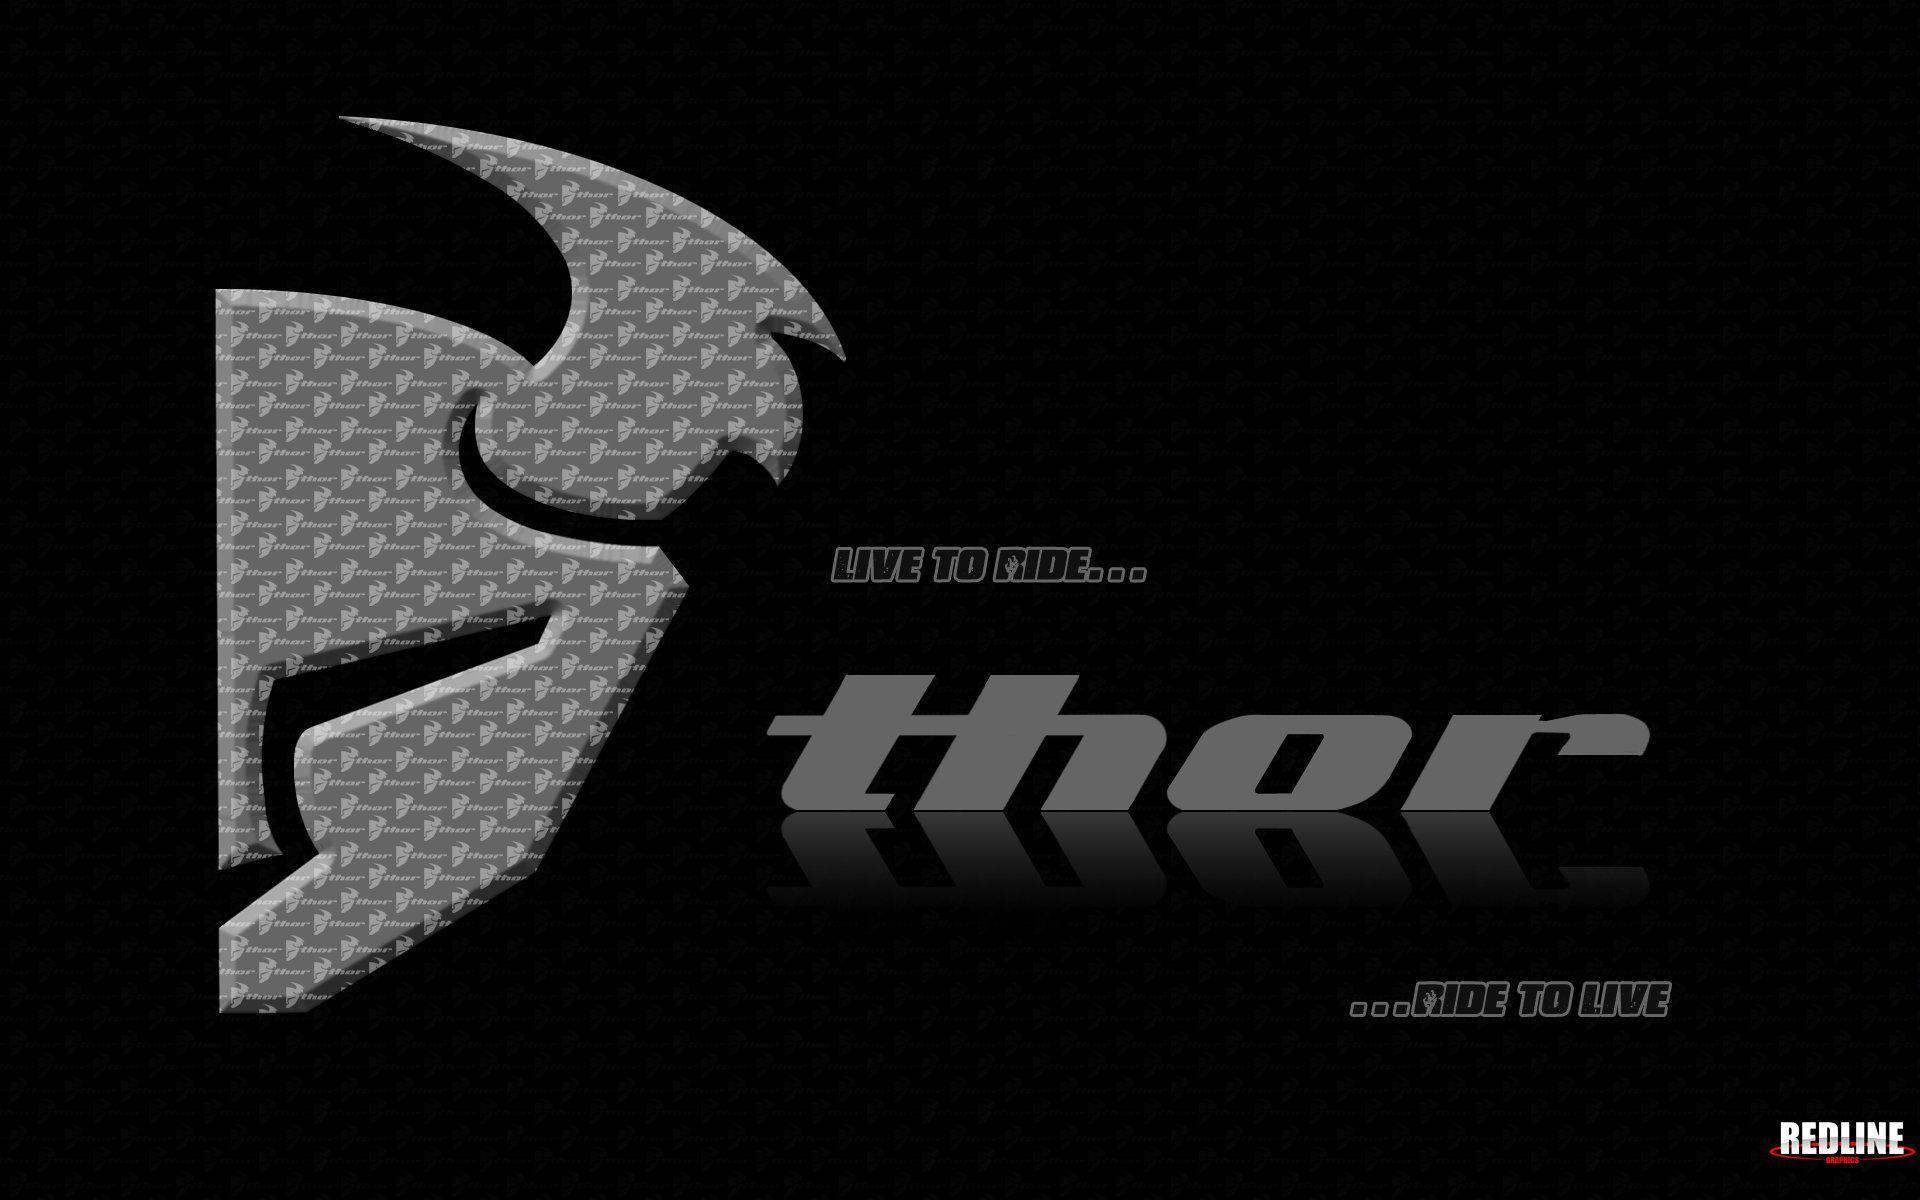 Keywords Thor Logo Wallpaper and Tags